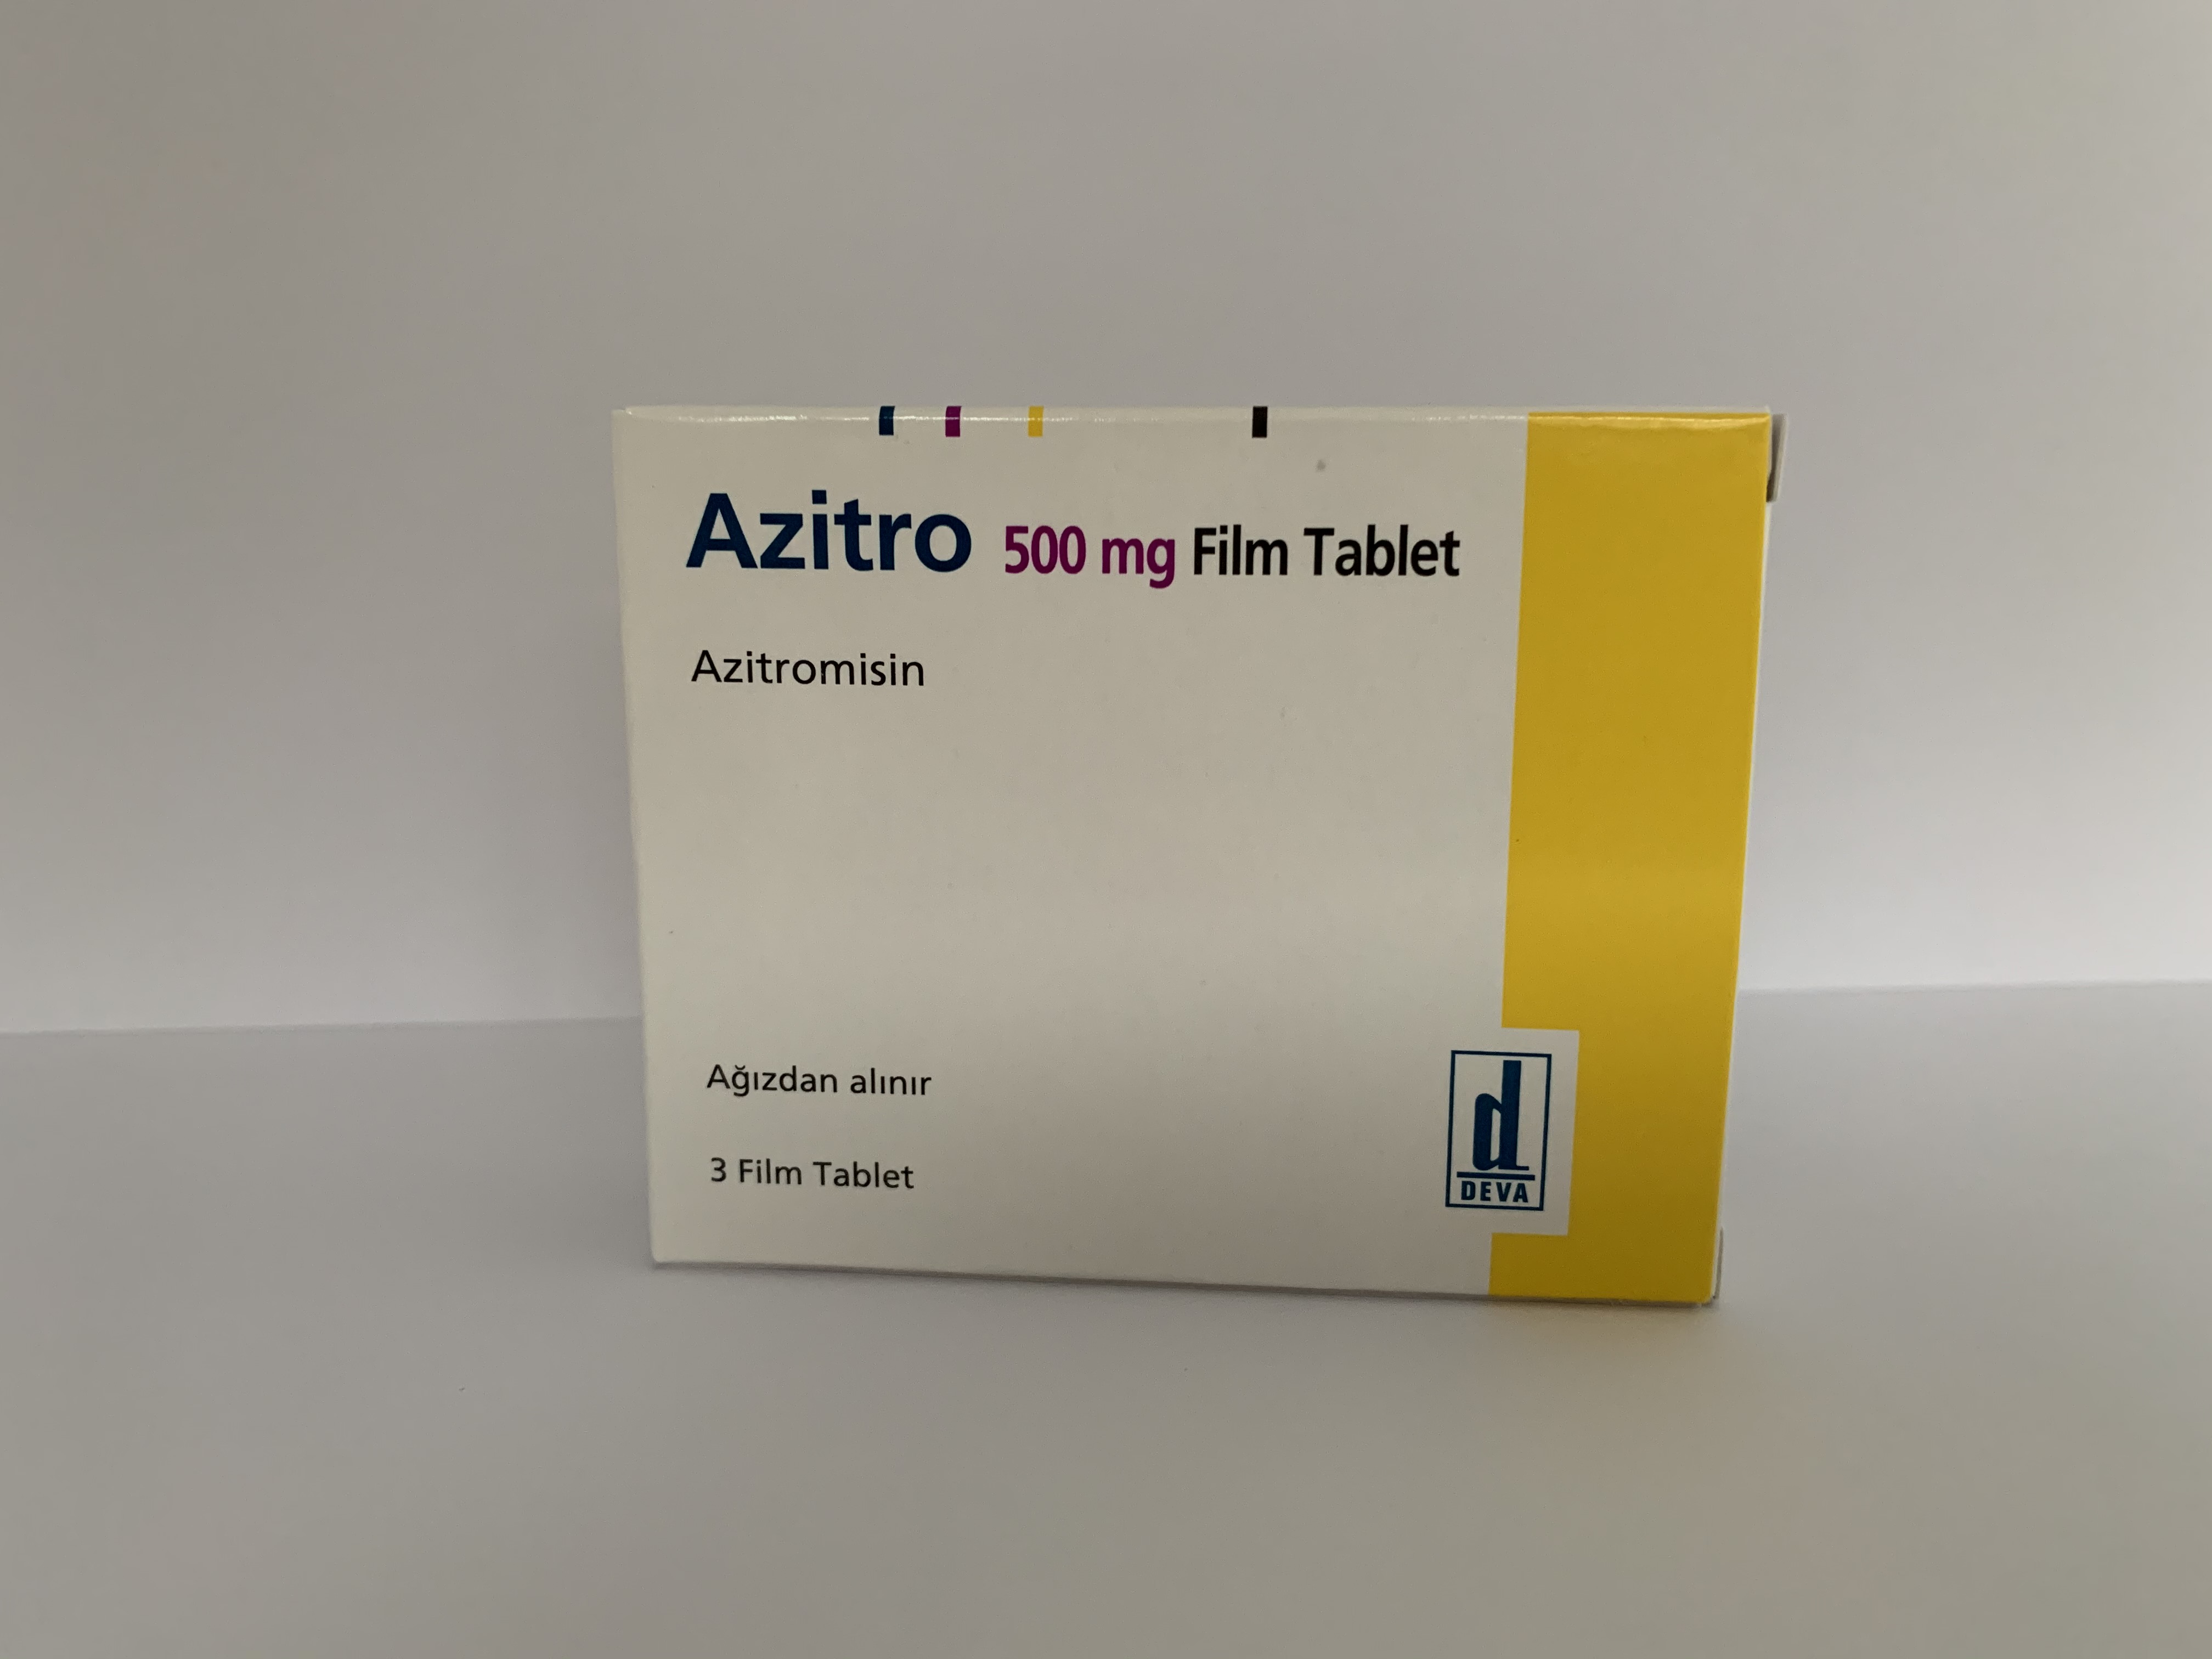 azitro-film-tablet-500-ne-ise-yarar